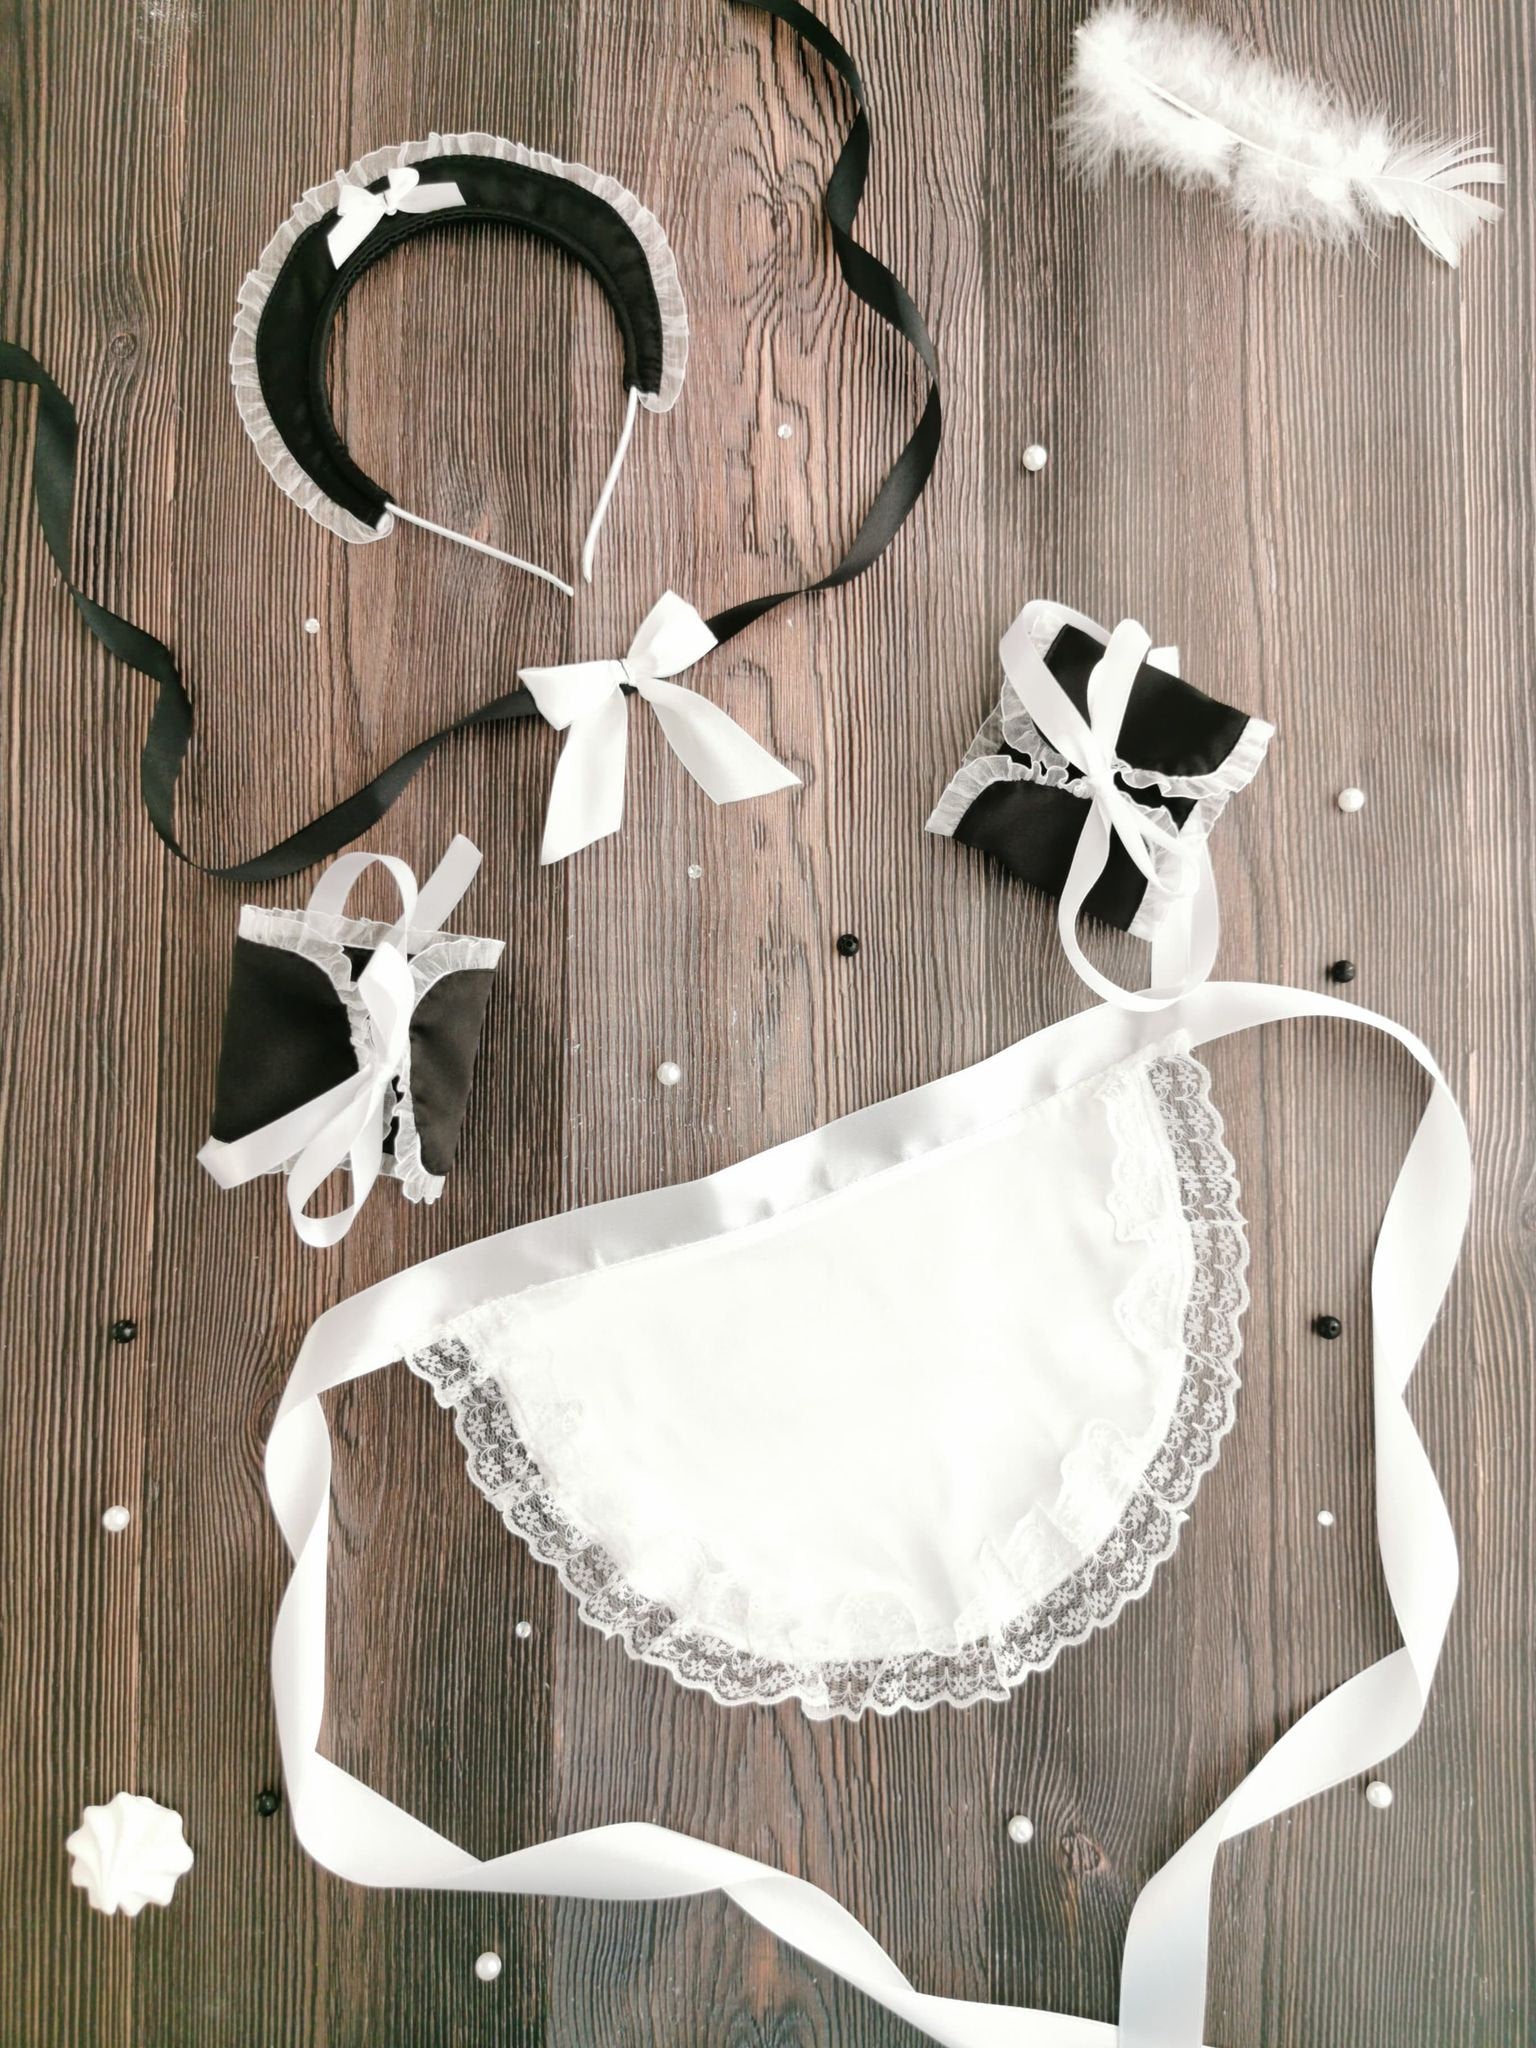 French Maid Costume - Elegant Black and White Design